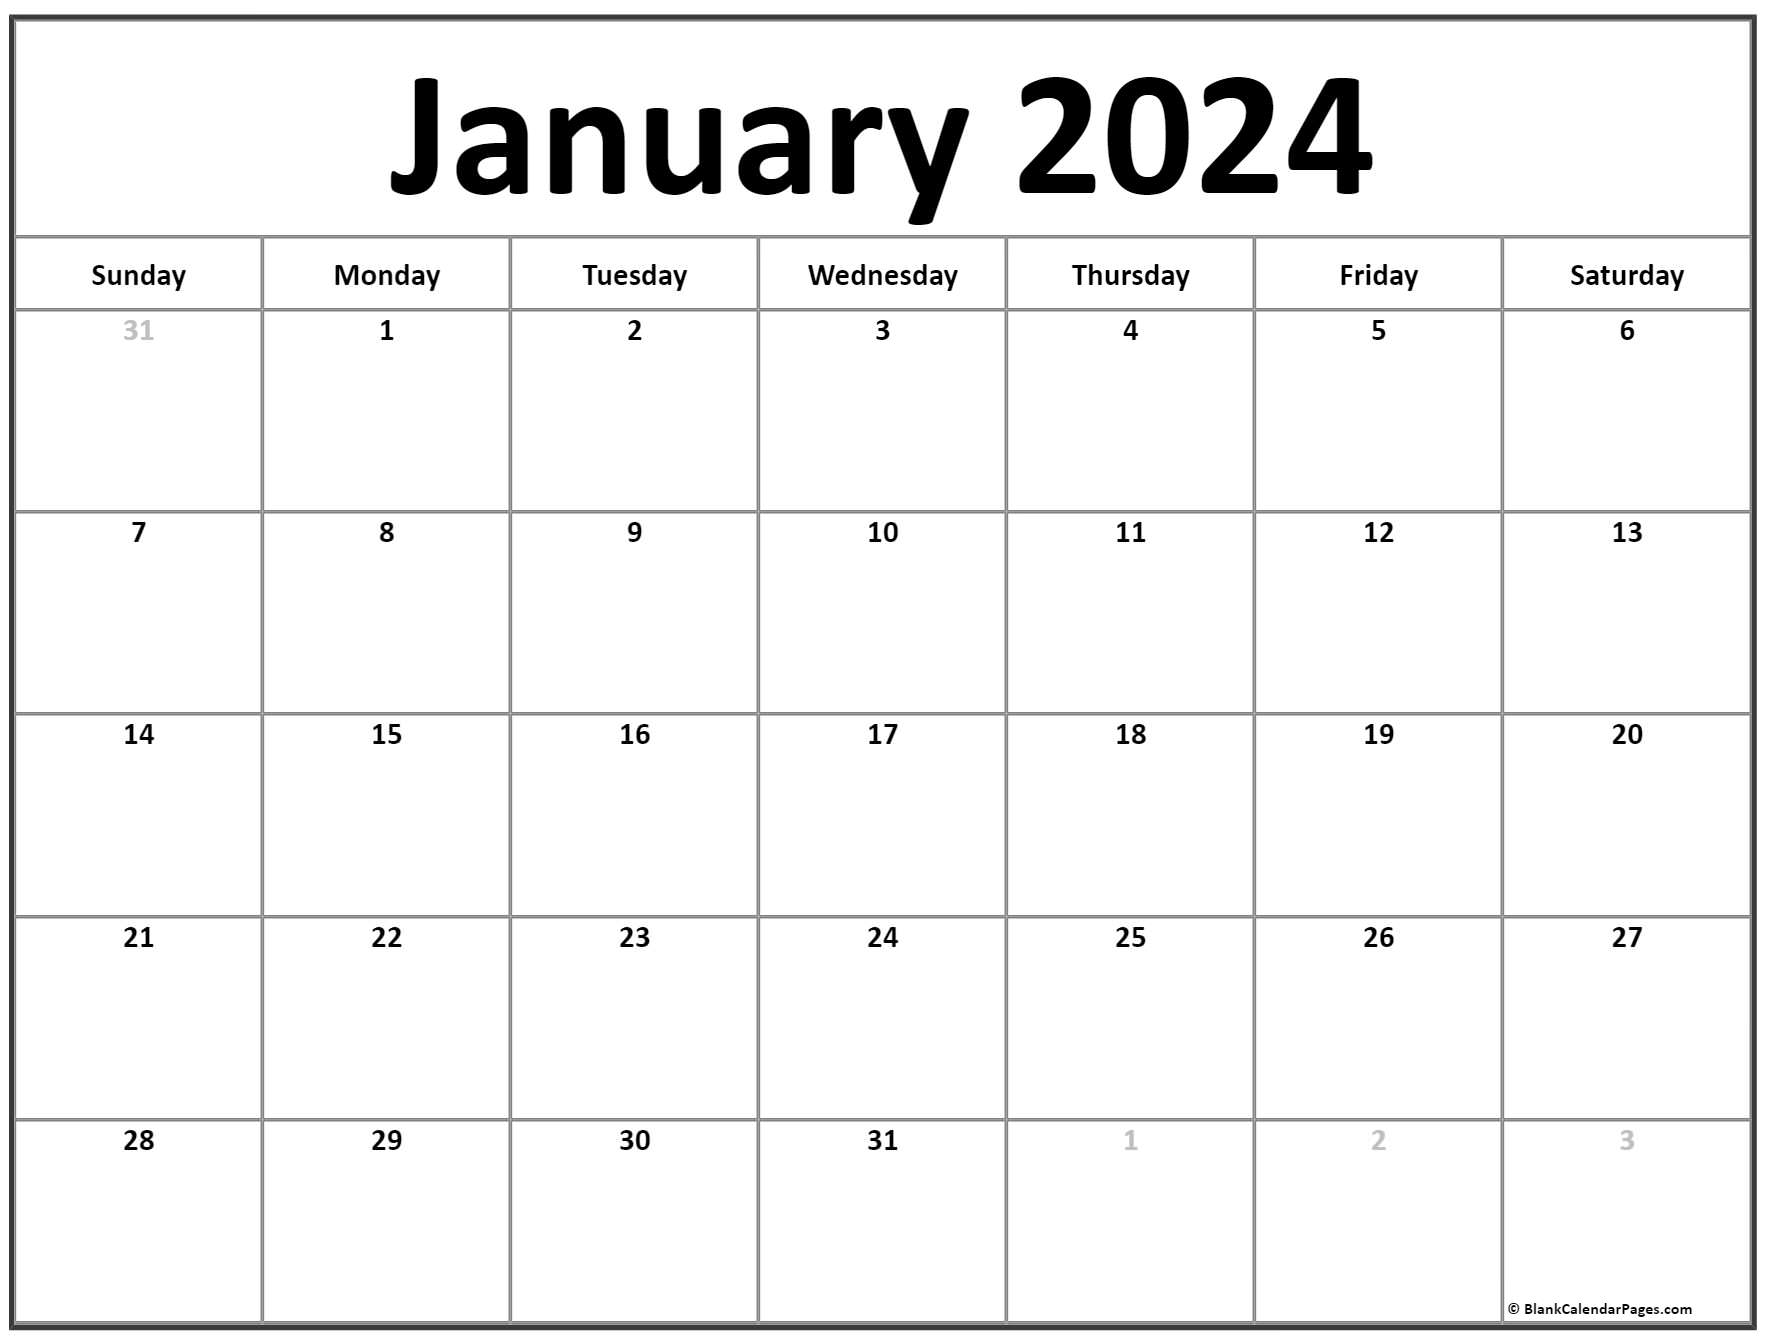 January 2022 calendar free printable calendar templates